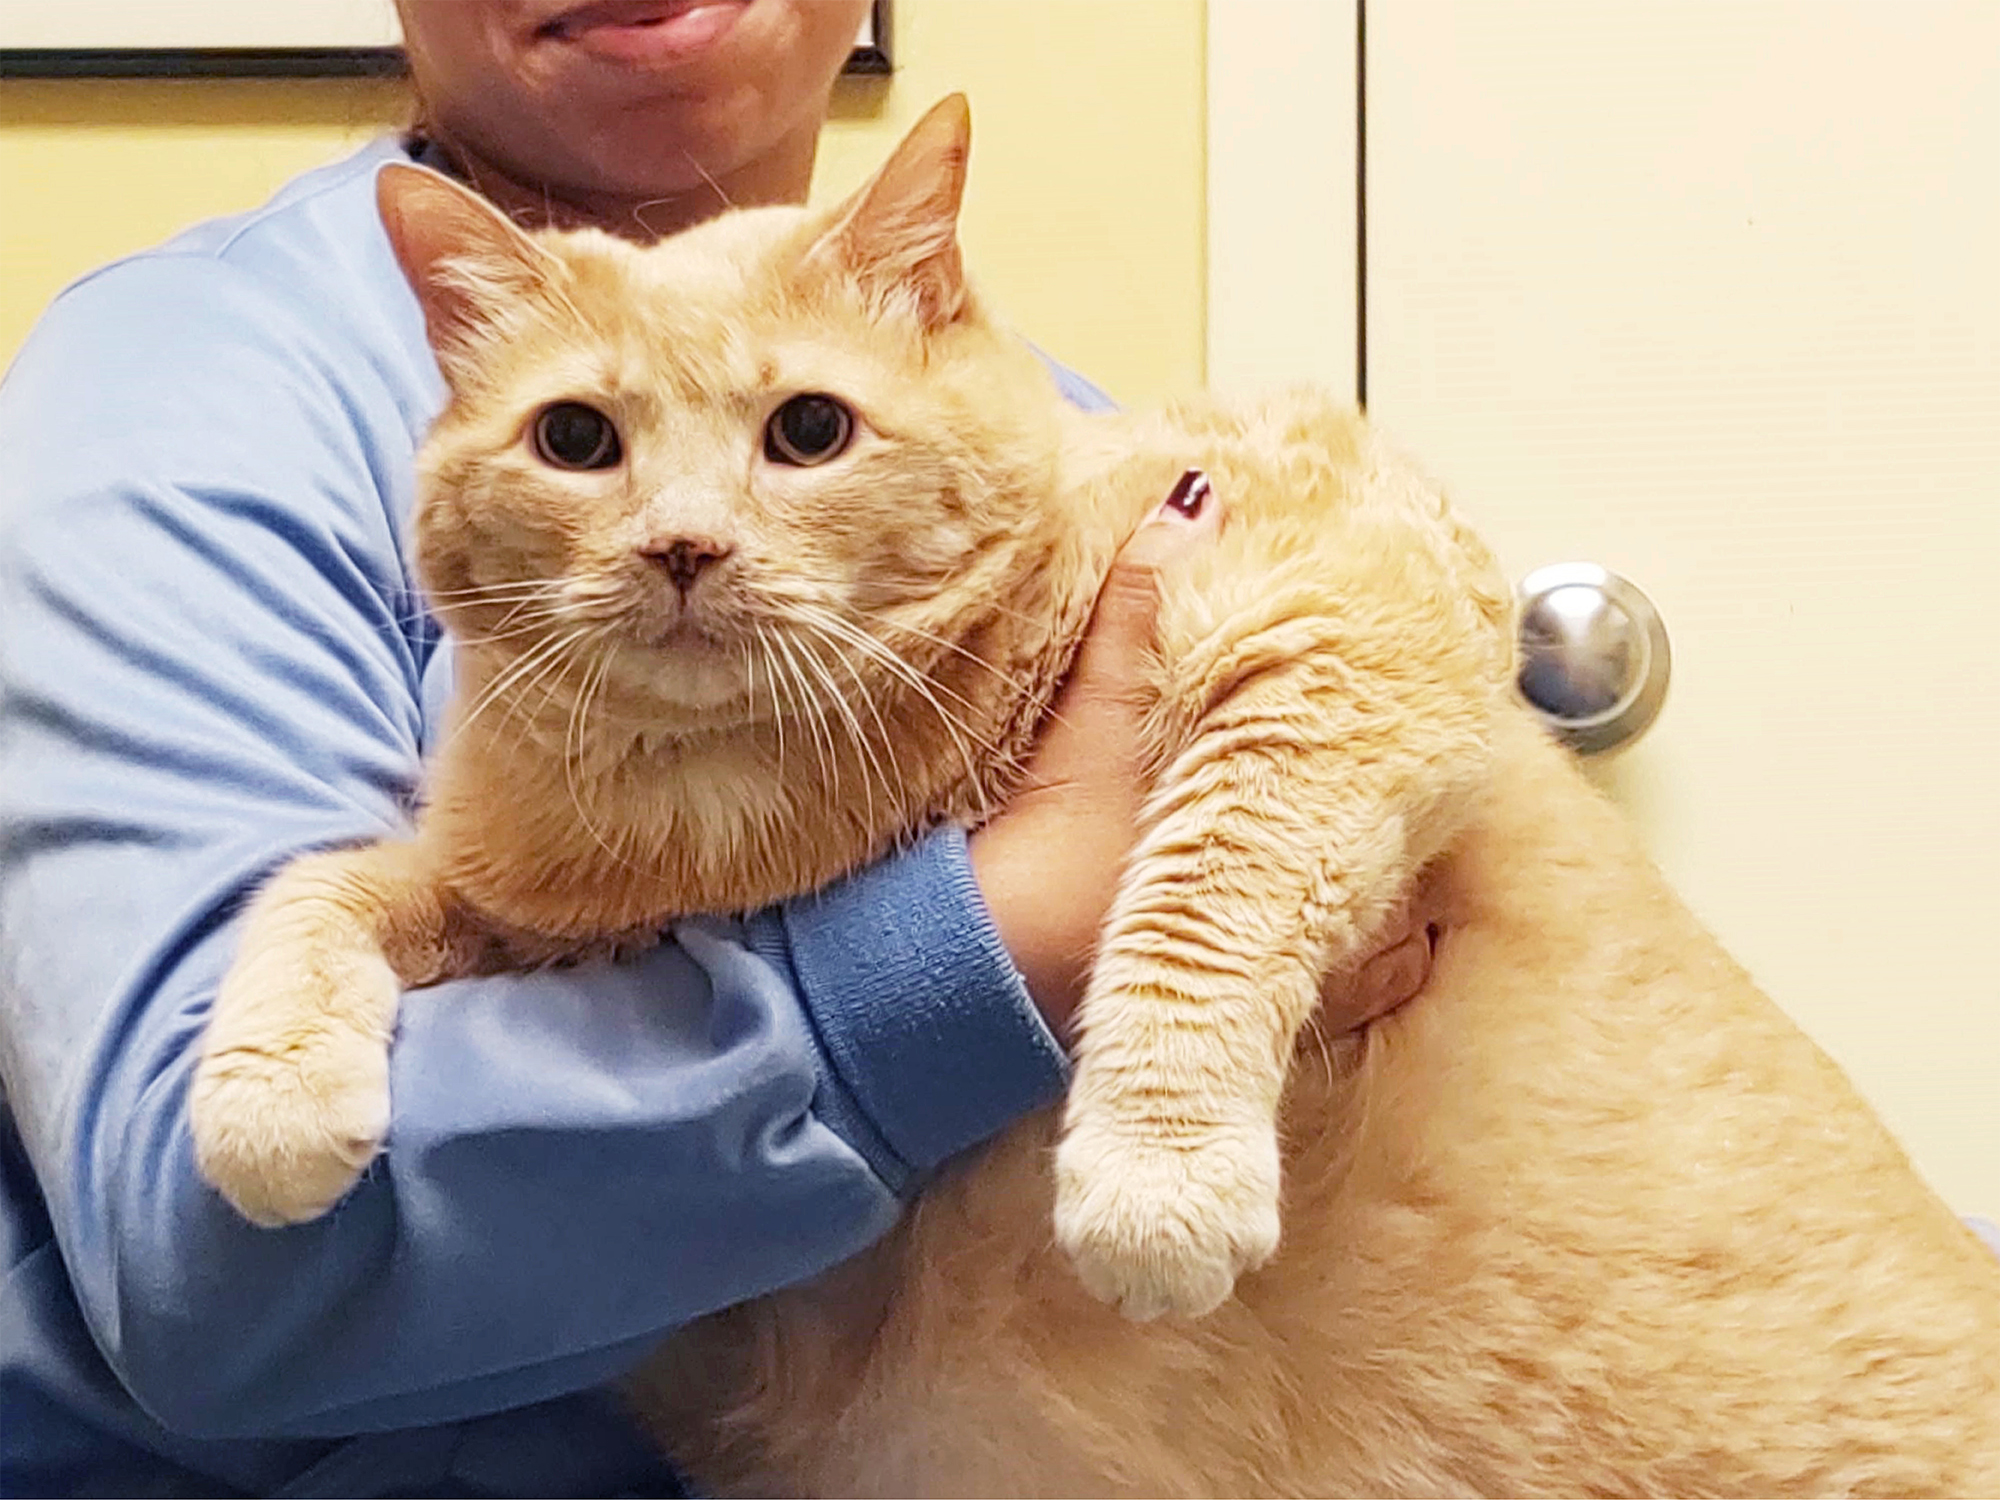 VCA Voice: Metro Cat Hospital extends life of 37 pound cat